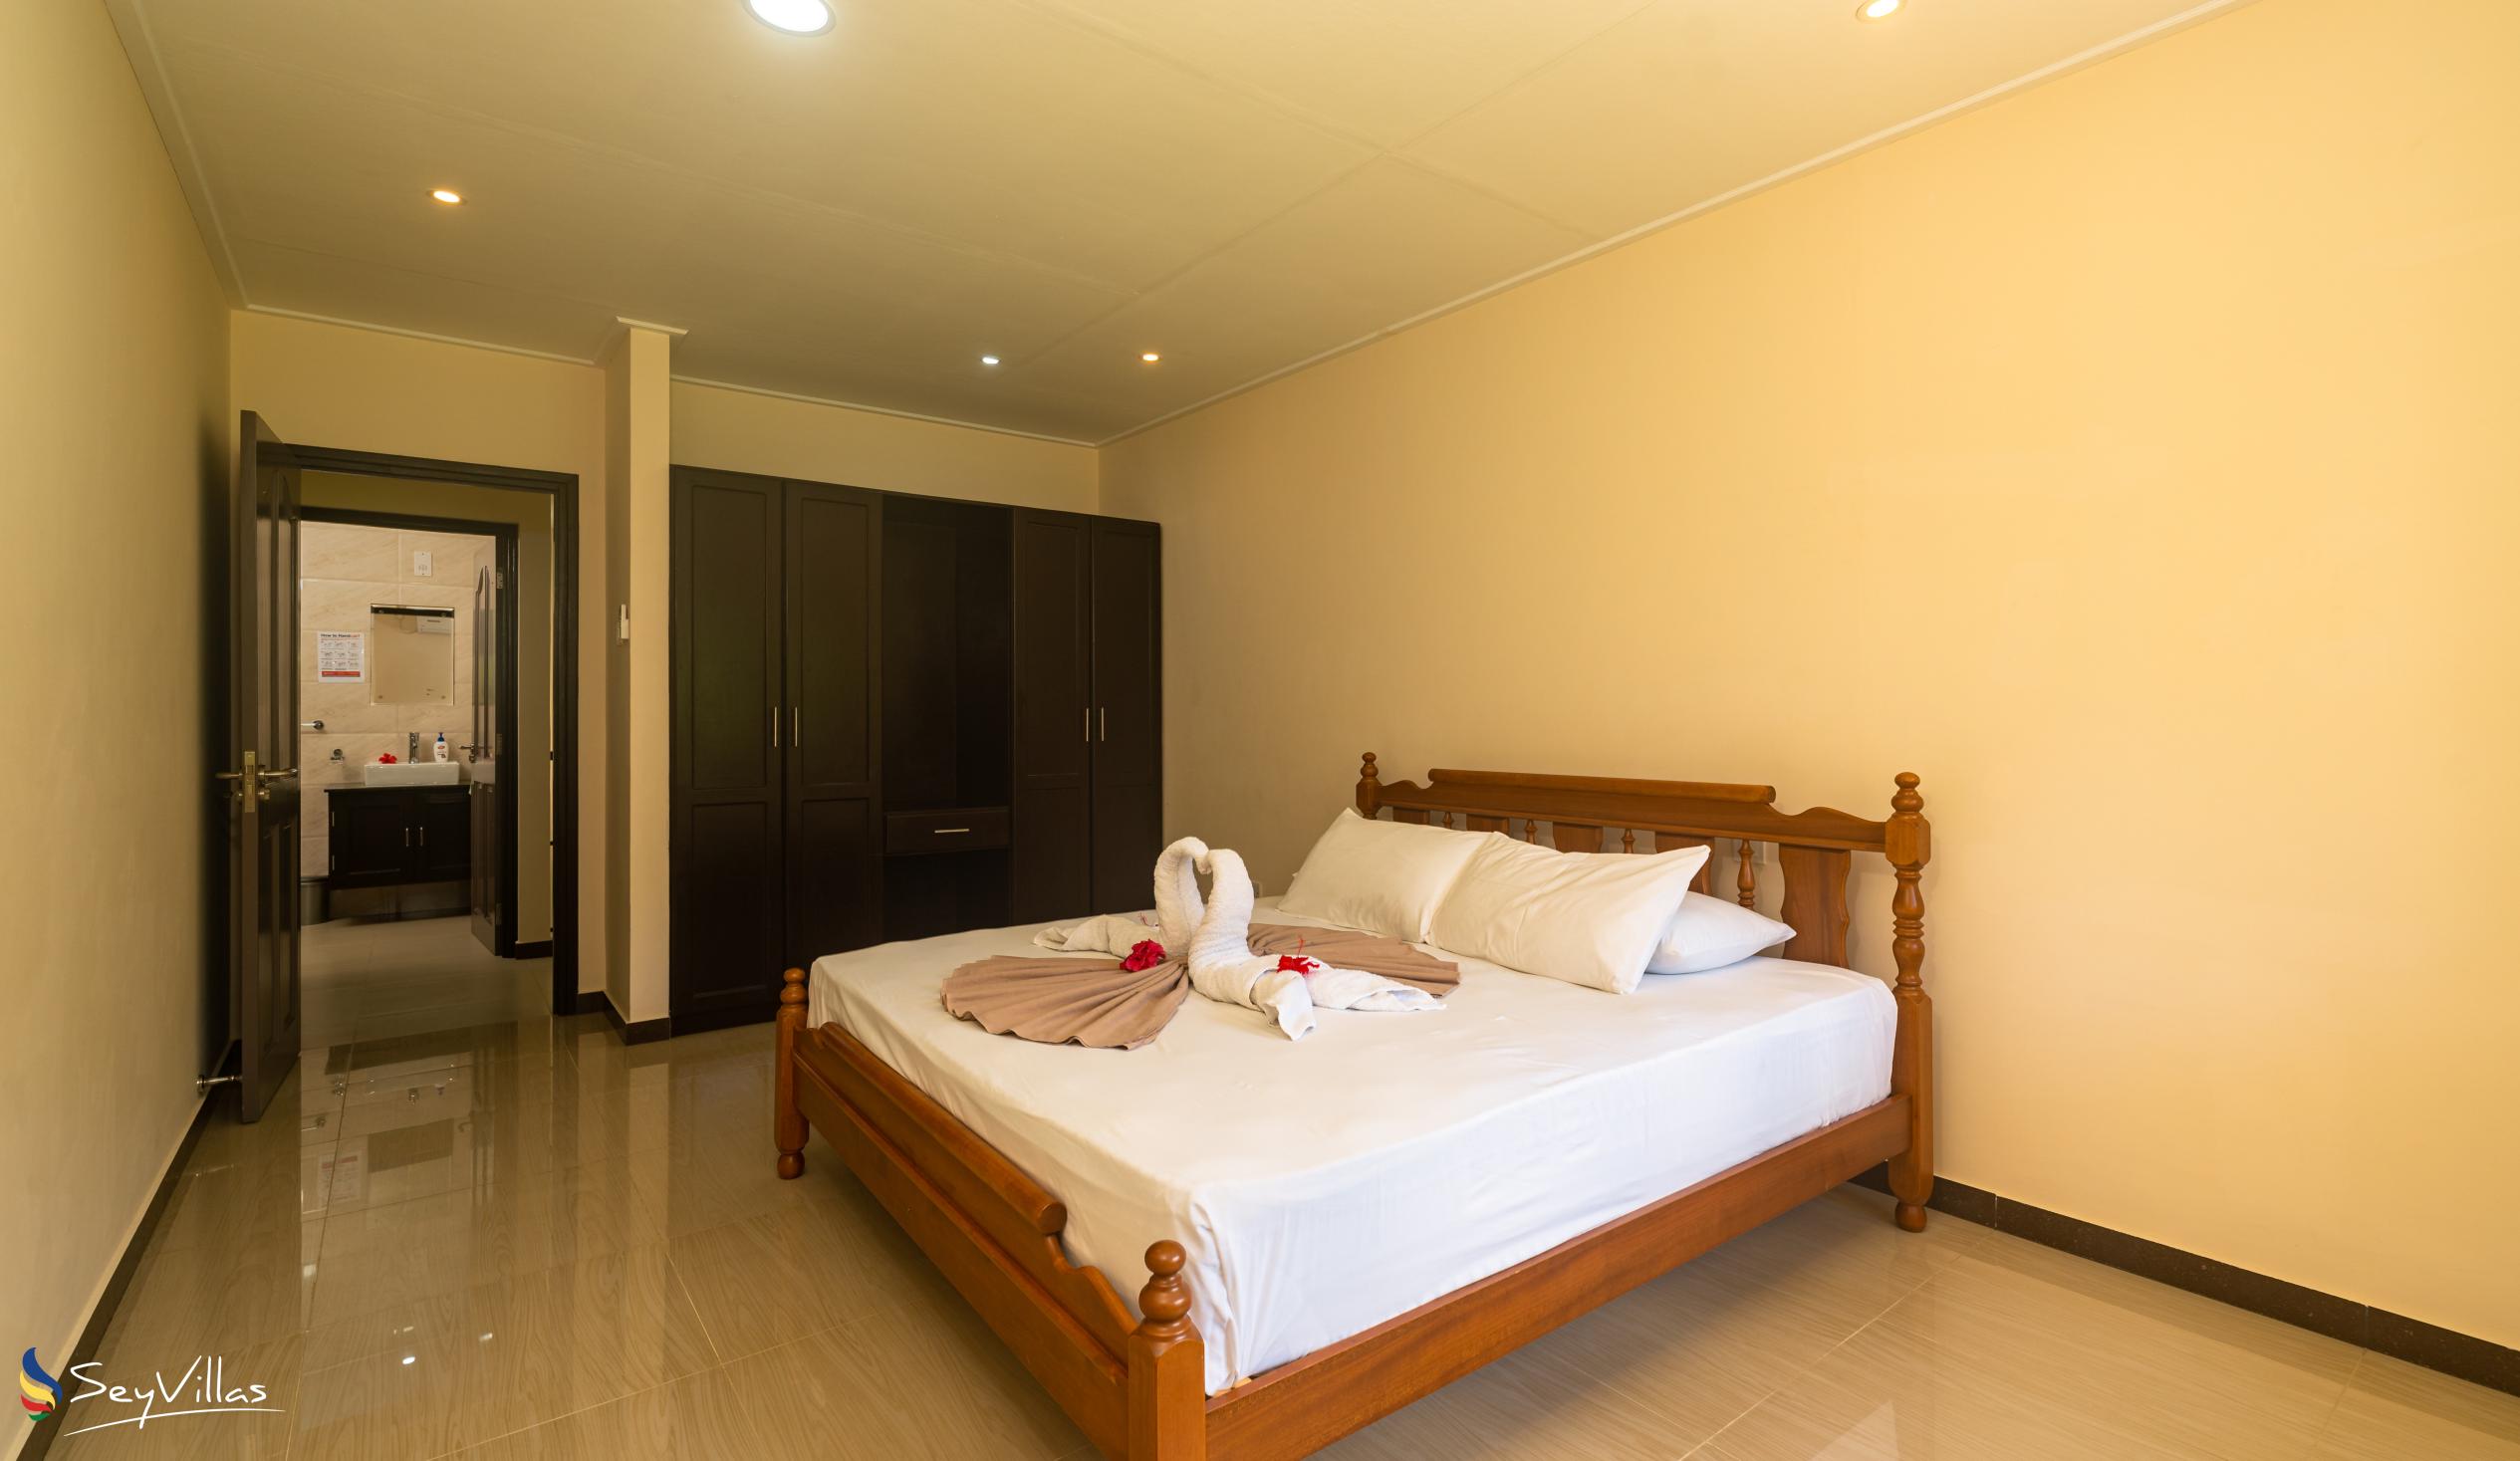 Photo 53: JAIDSS Holiday Apartments - 2-Bedroom Apartment - Mahé (Seychelles)